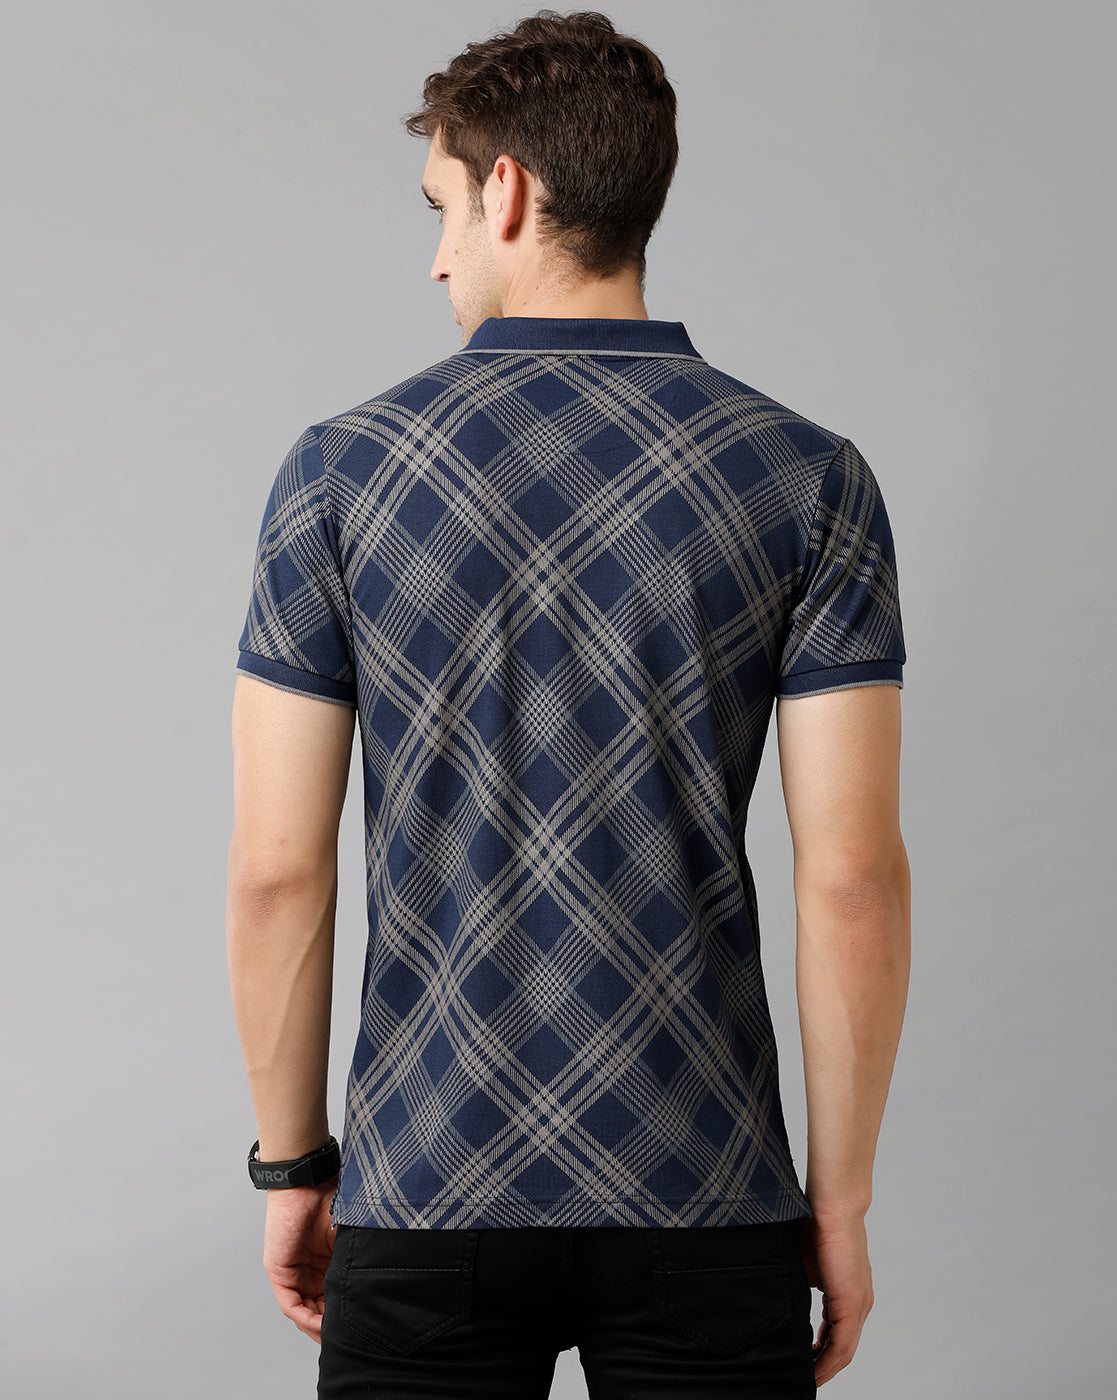 CP BRO Men's Cotton Printed Half Sleeve Slim Fit Polo Neck Blue Color T-Shirt | Brp 341 B